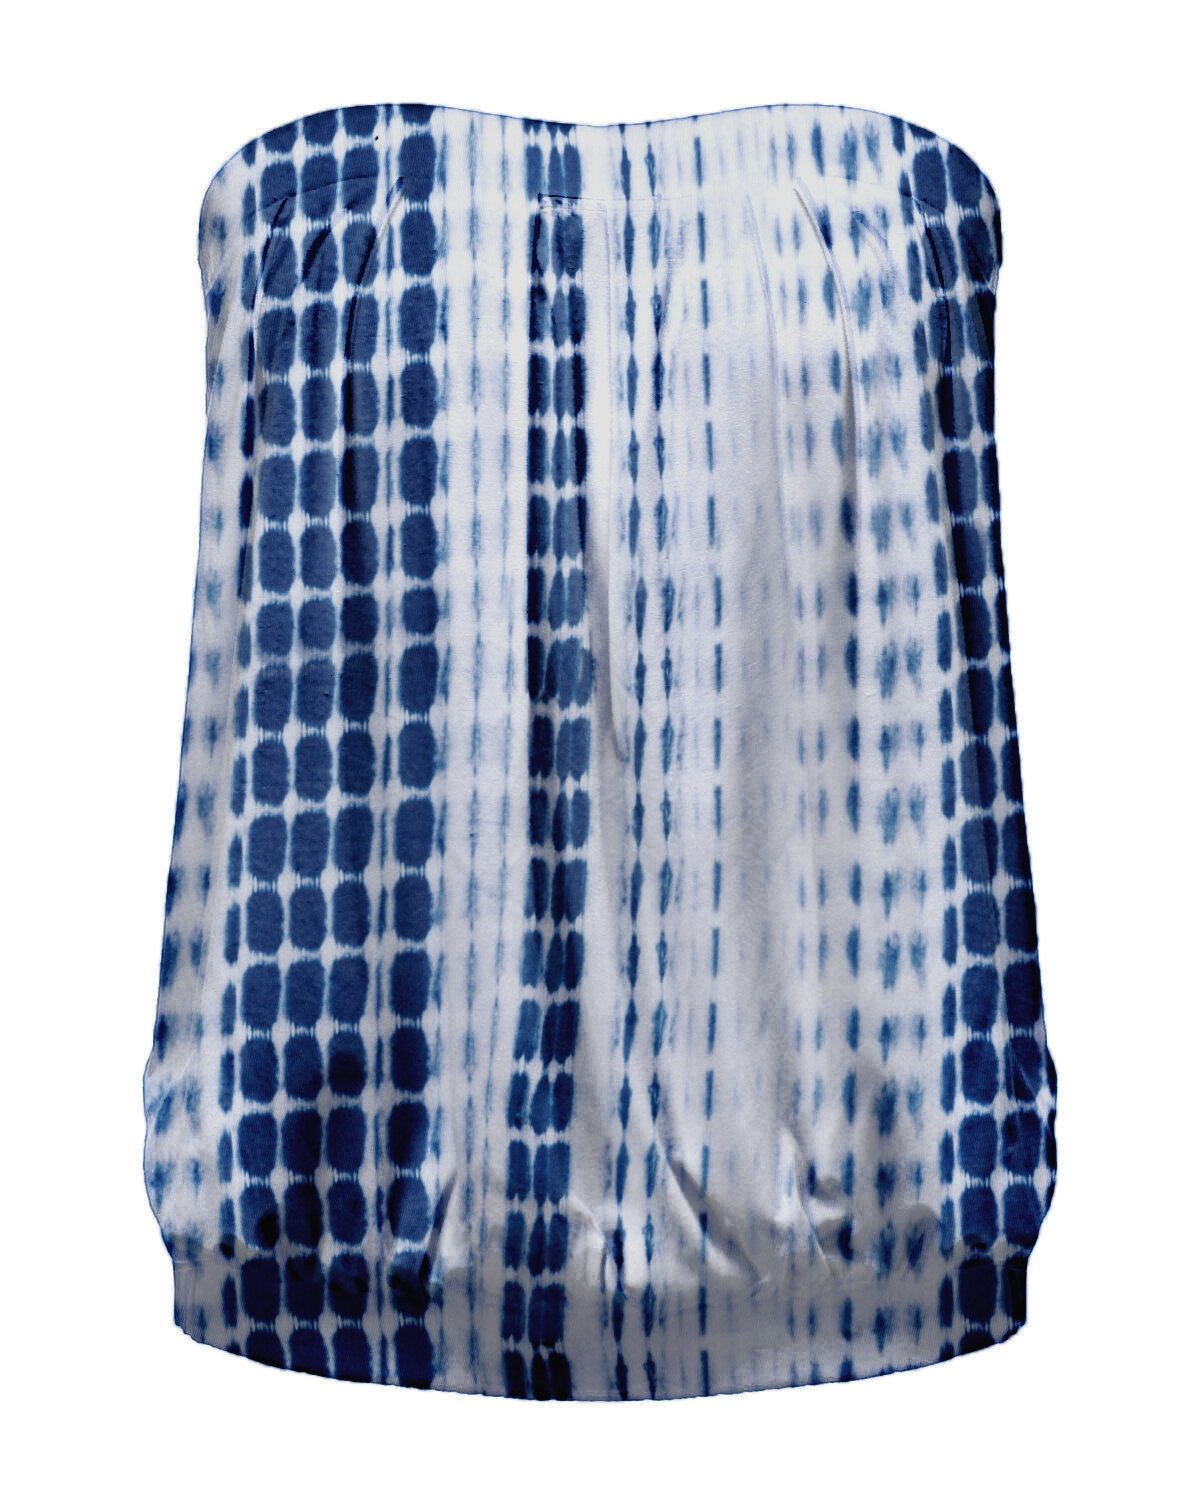 Image of Frauen Tube Tops Tie Dye Solid Print Trgerlose rmellose Hemden Tank Tops